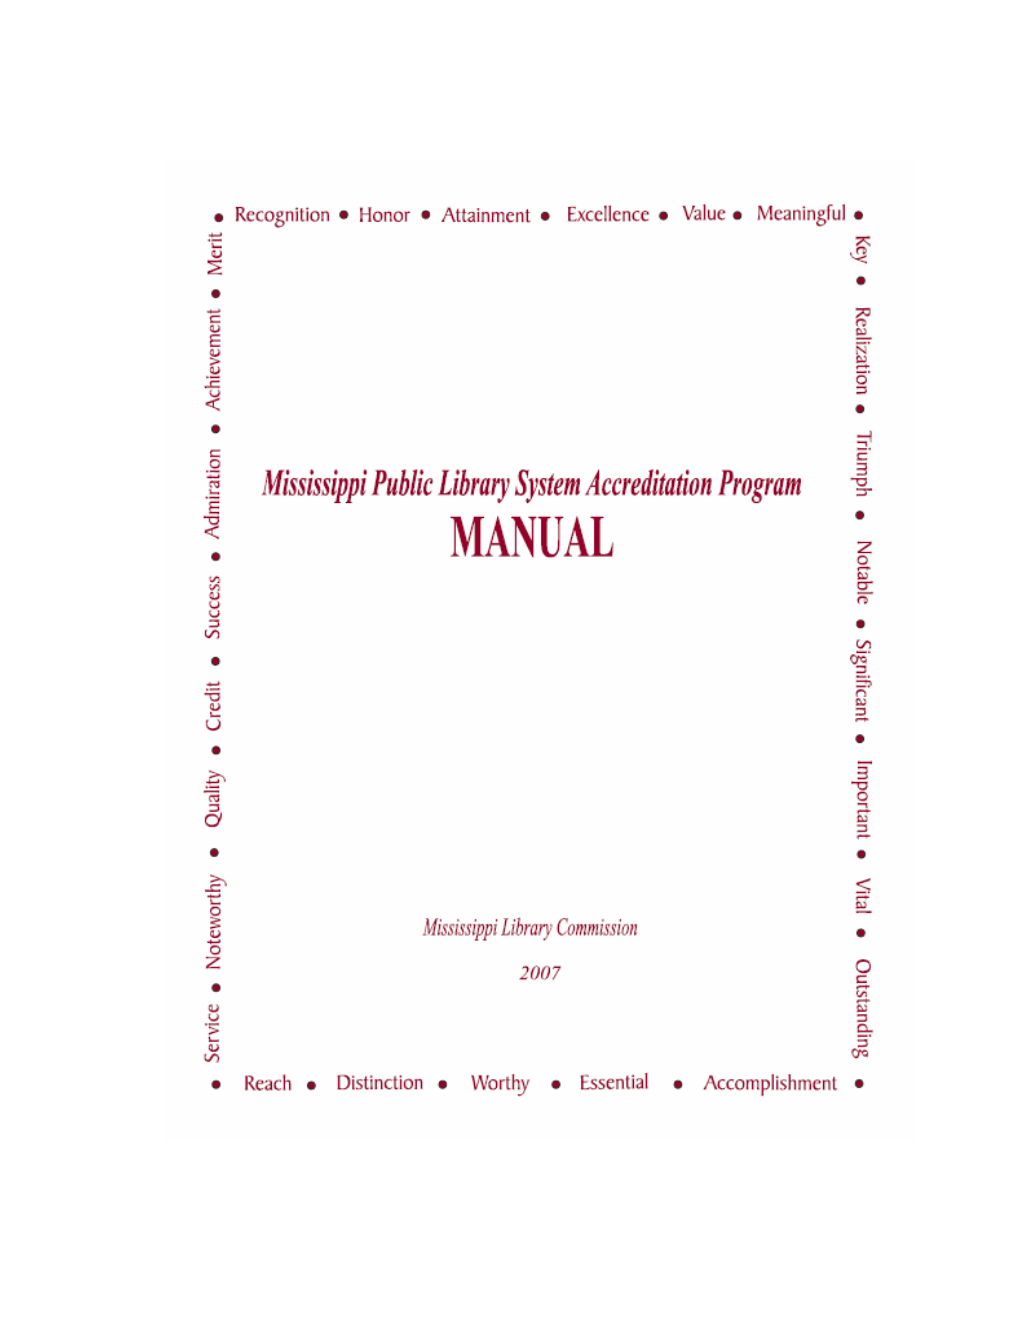 Mississippi Public Library System Accreditation Program Manual